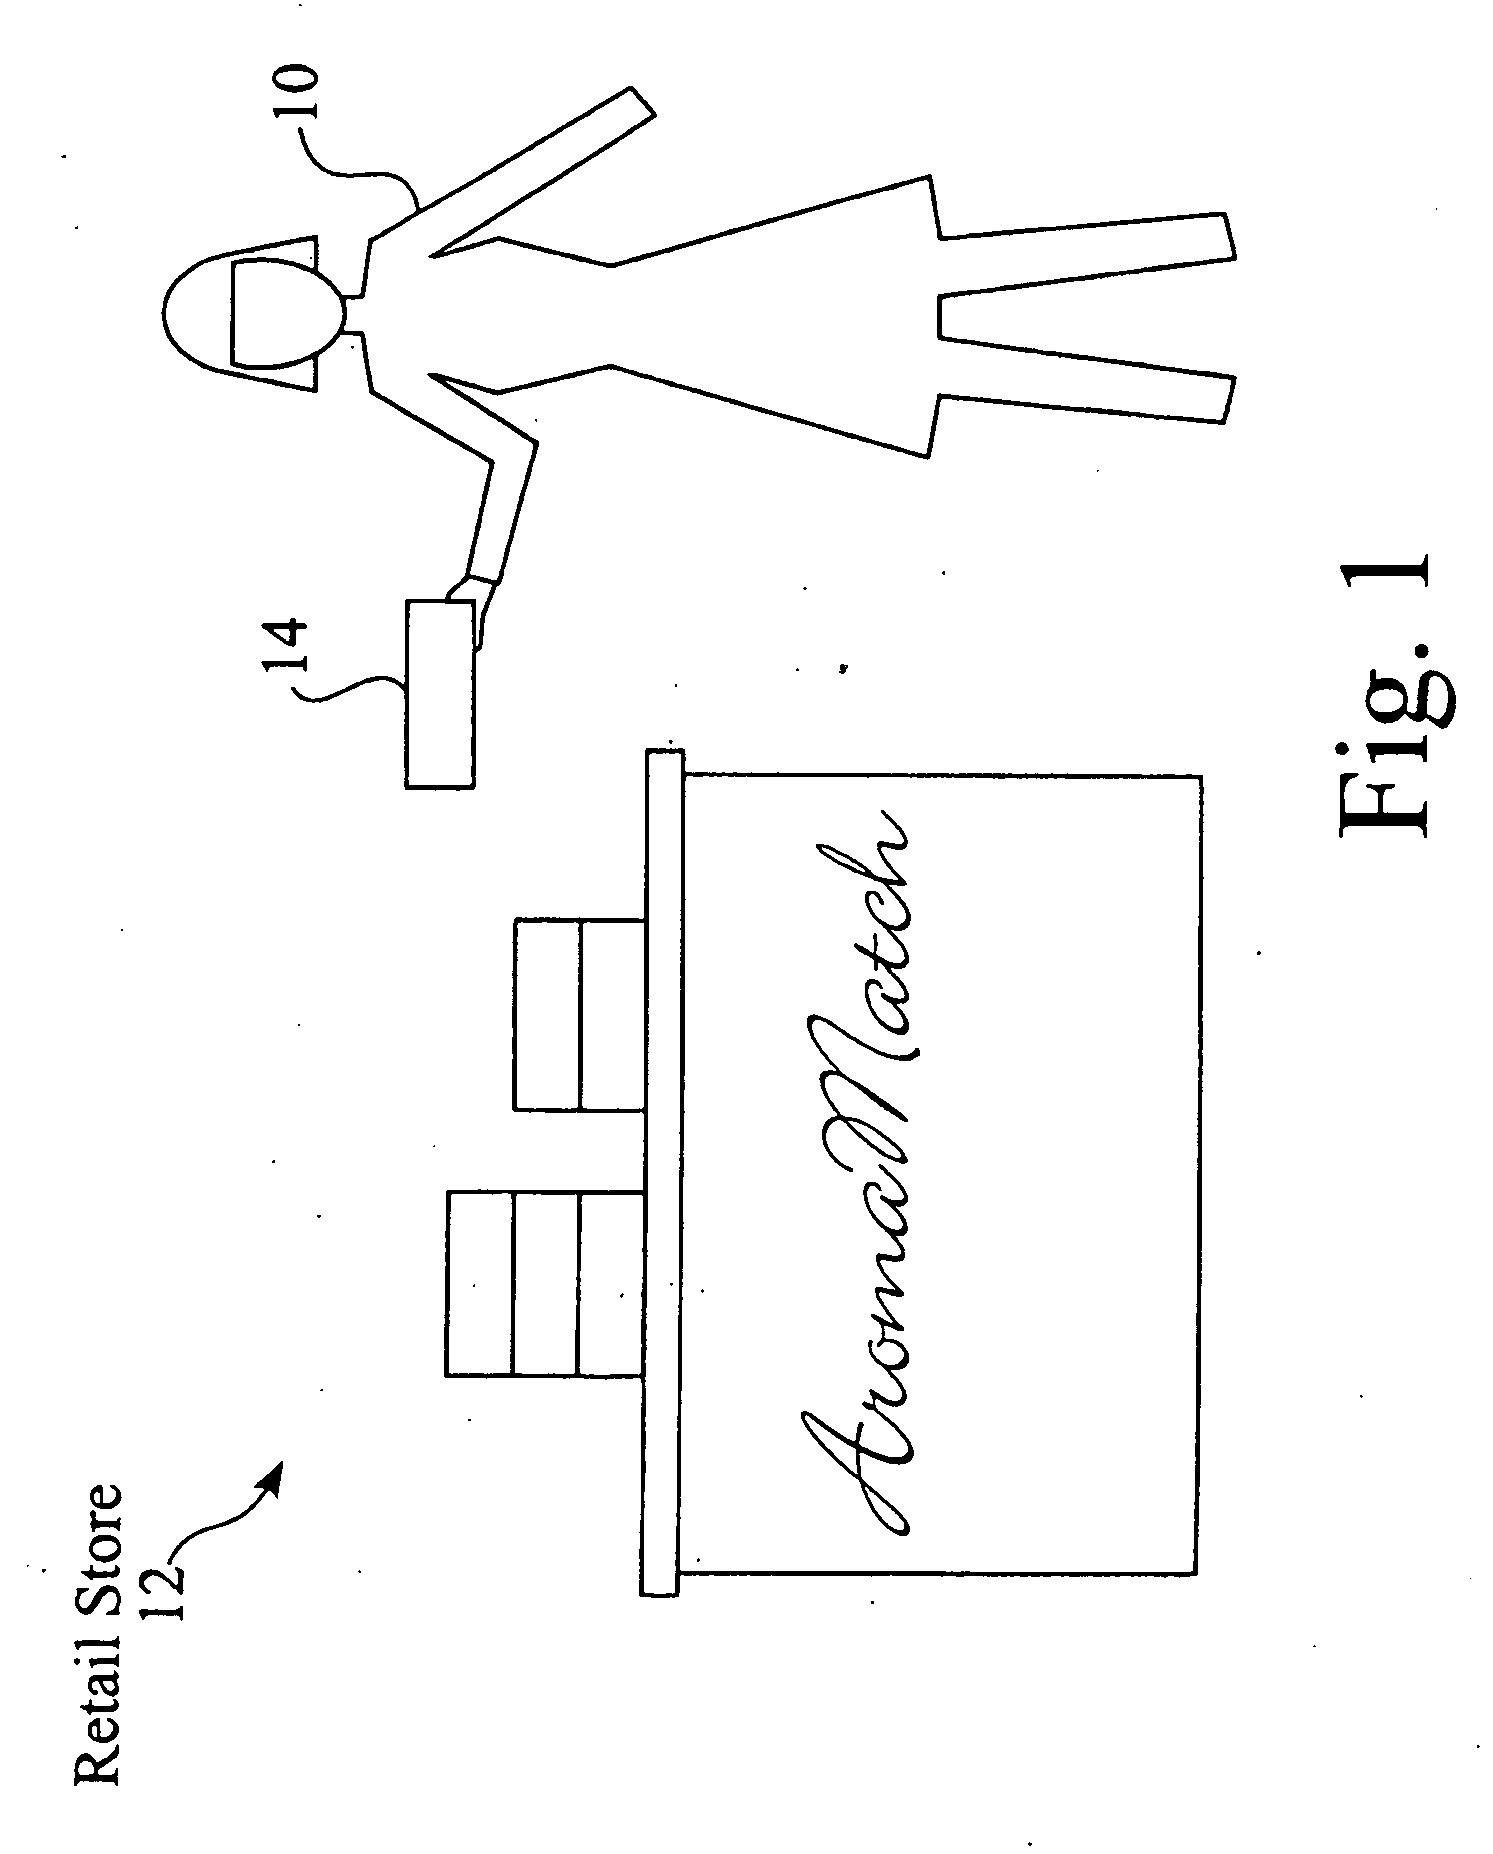 Human sample matching system